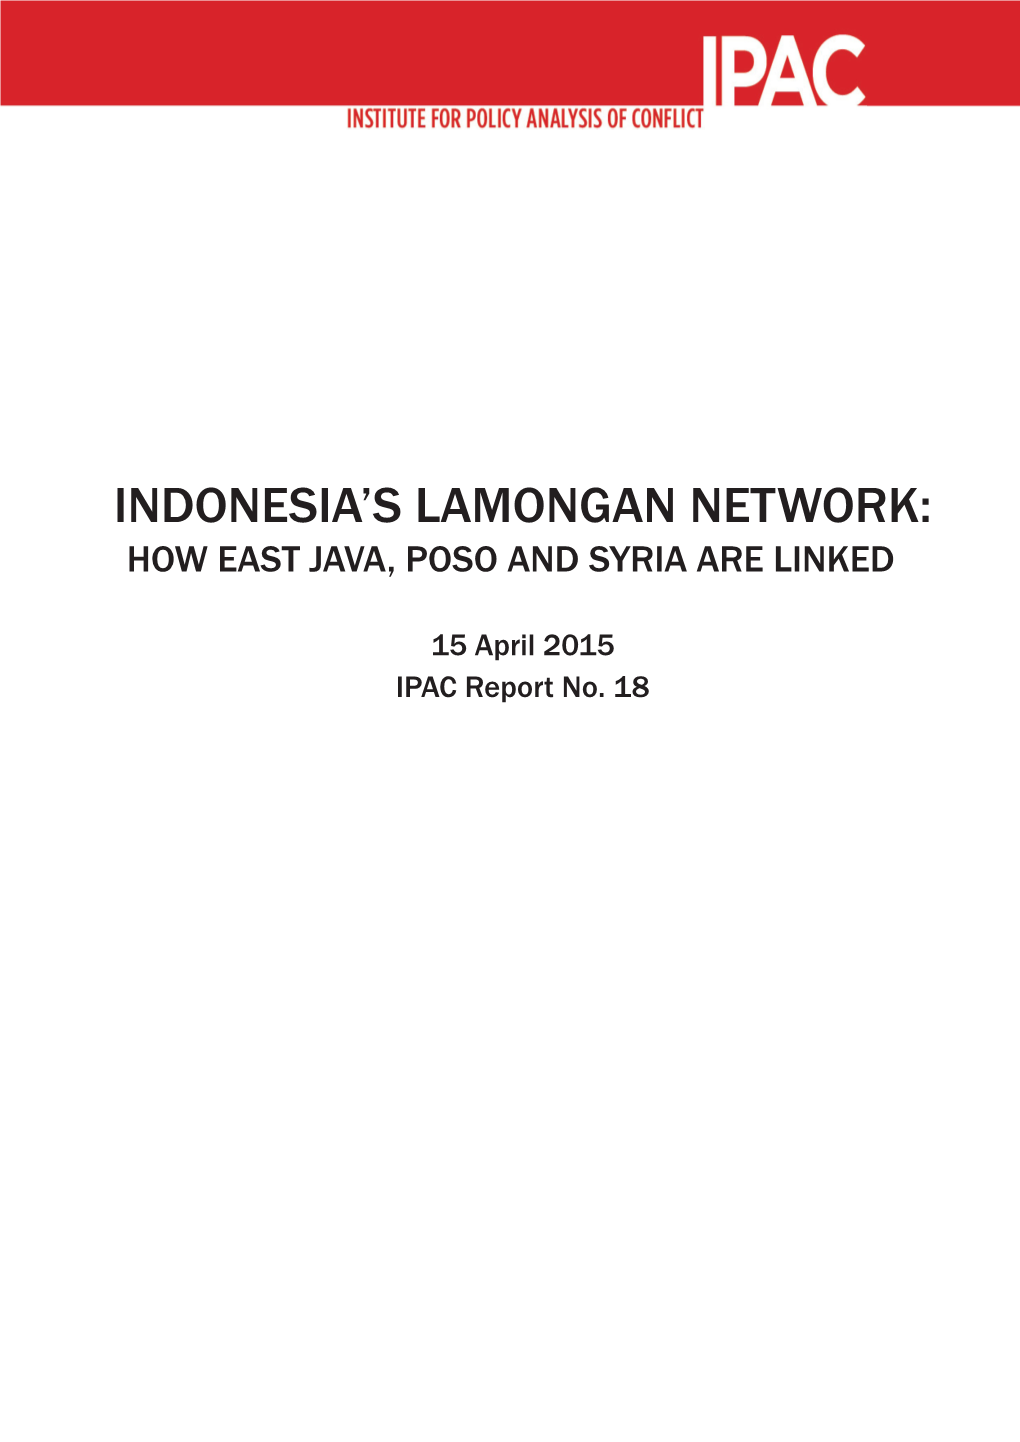 Indonesia's Lamongan Network